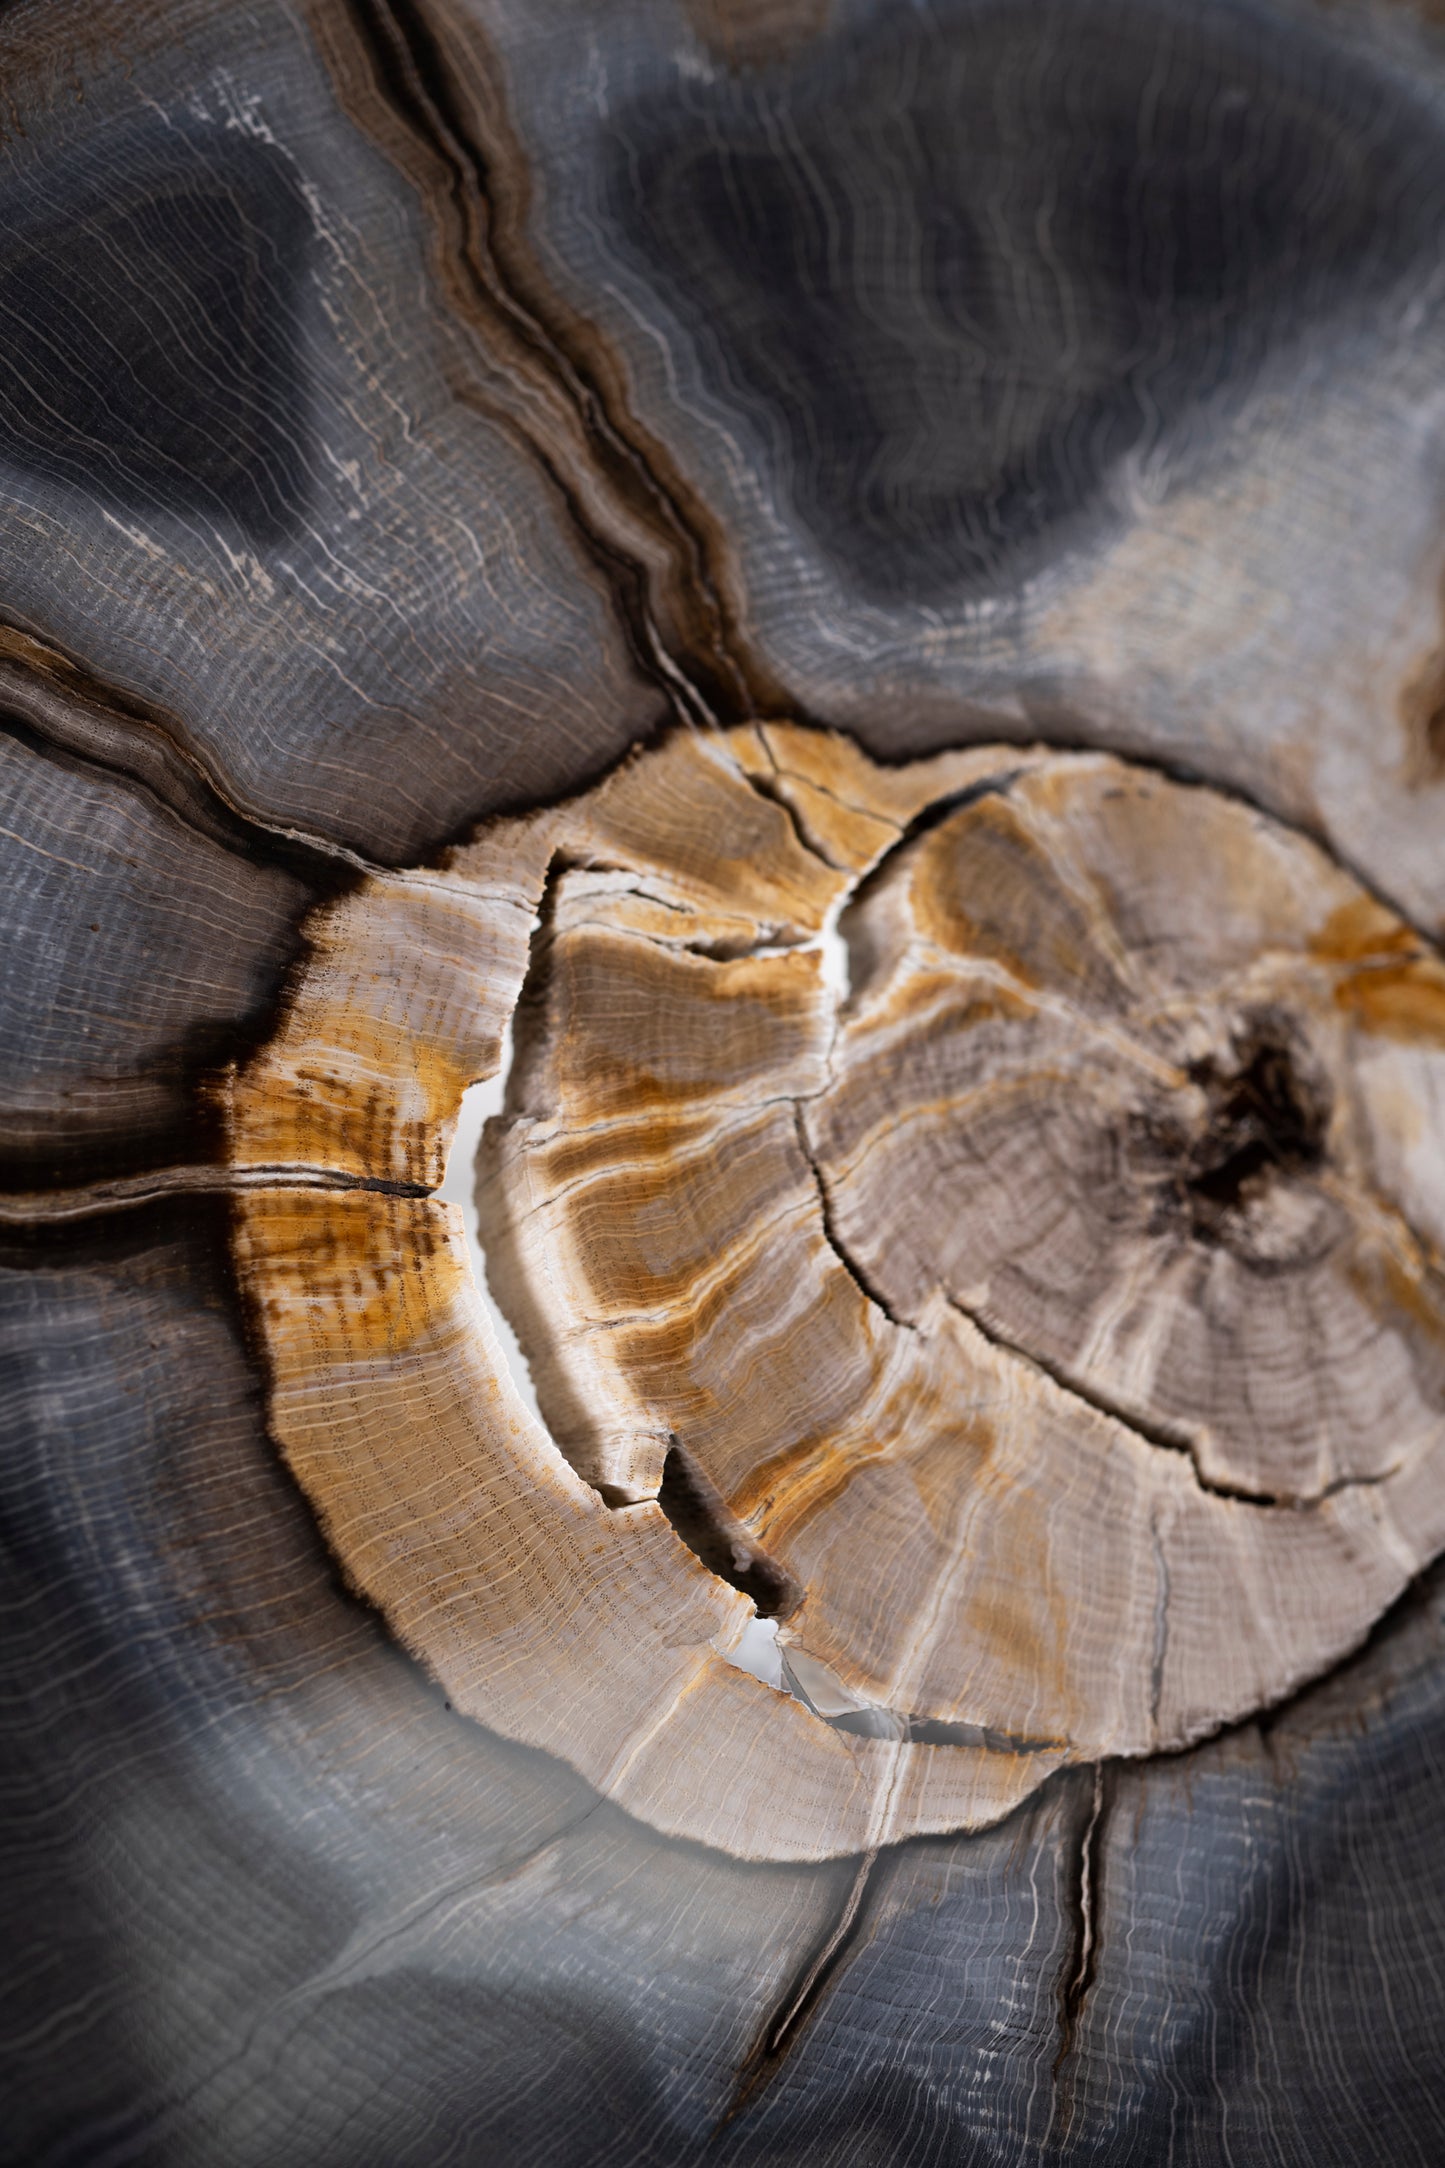 Petrified wood disc from Stinking Water, Oregon, USA